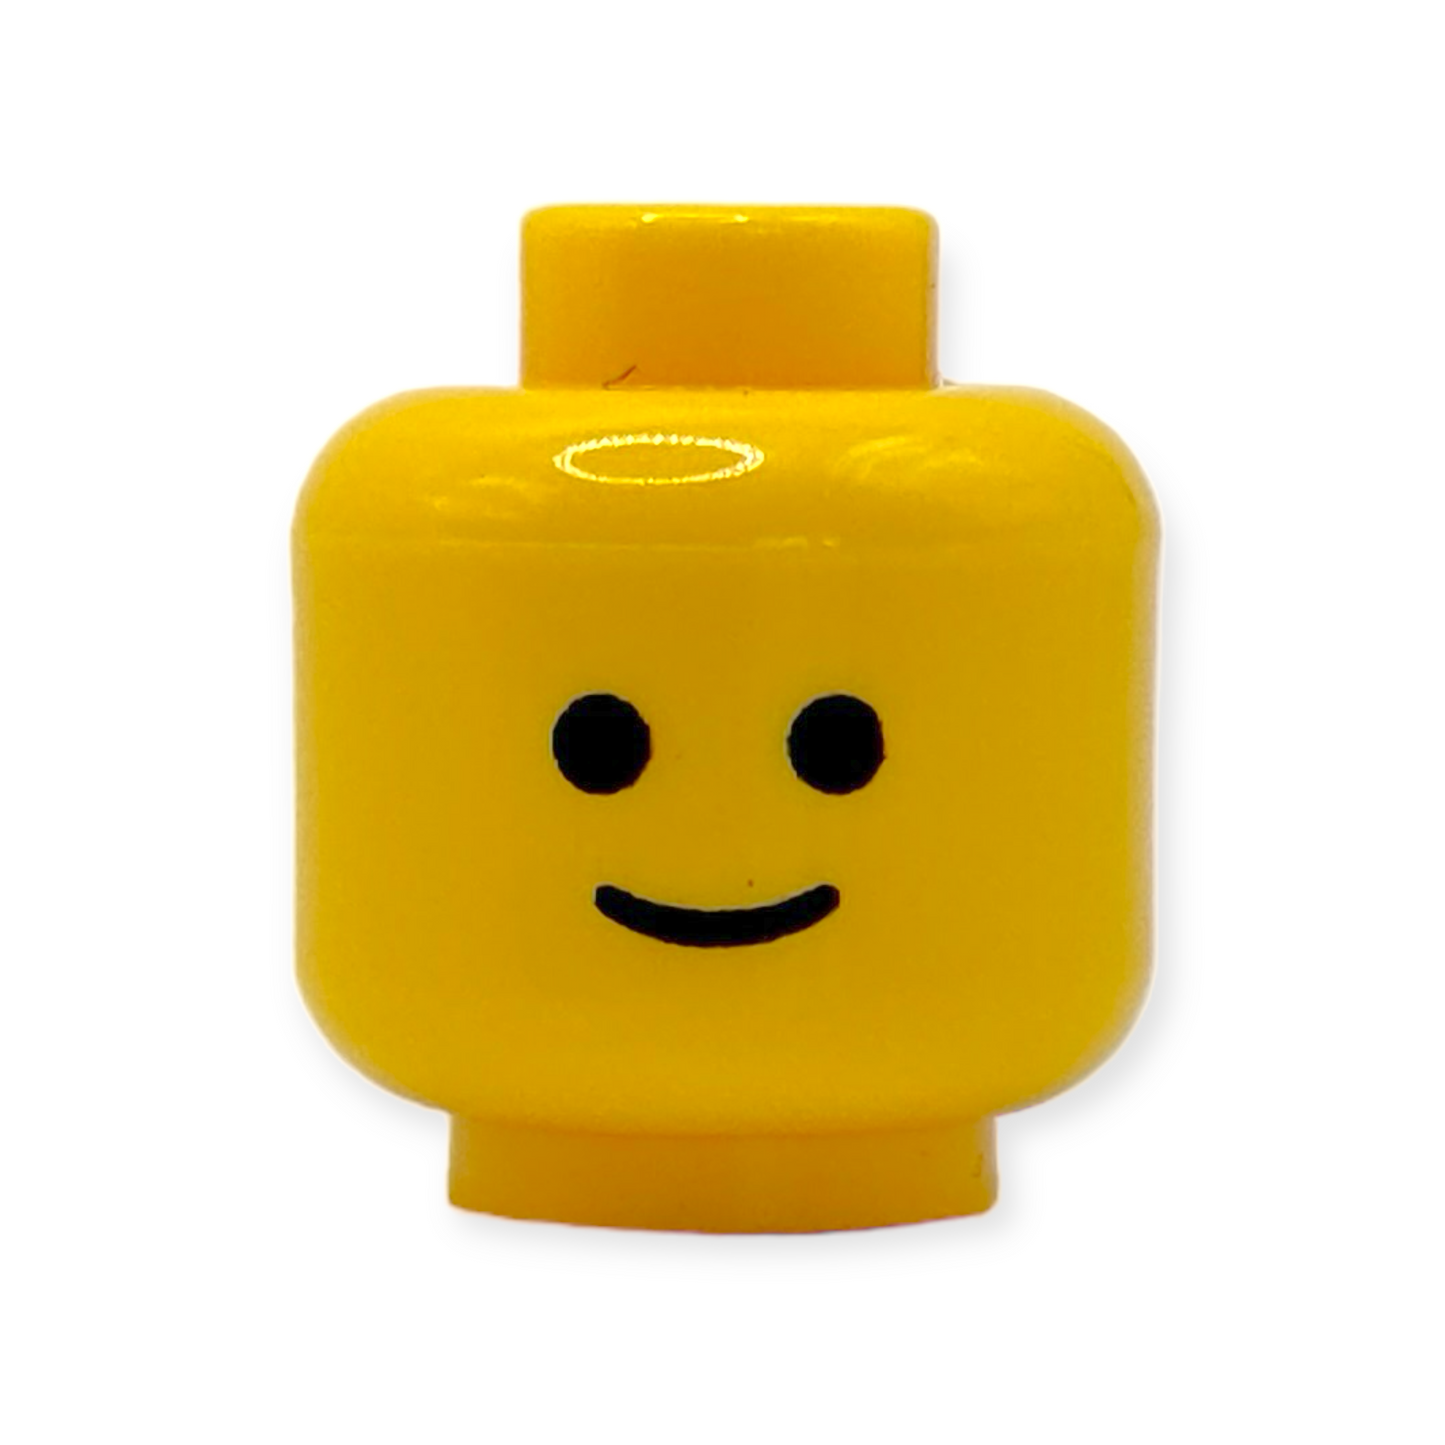 LEGO Head - 9336 Classic Head